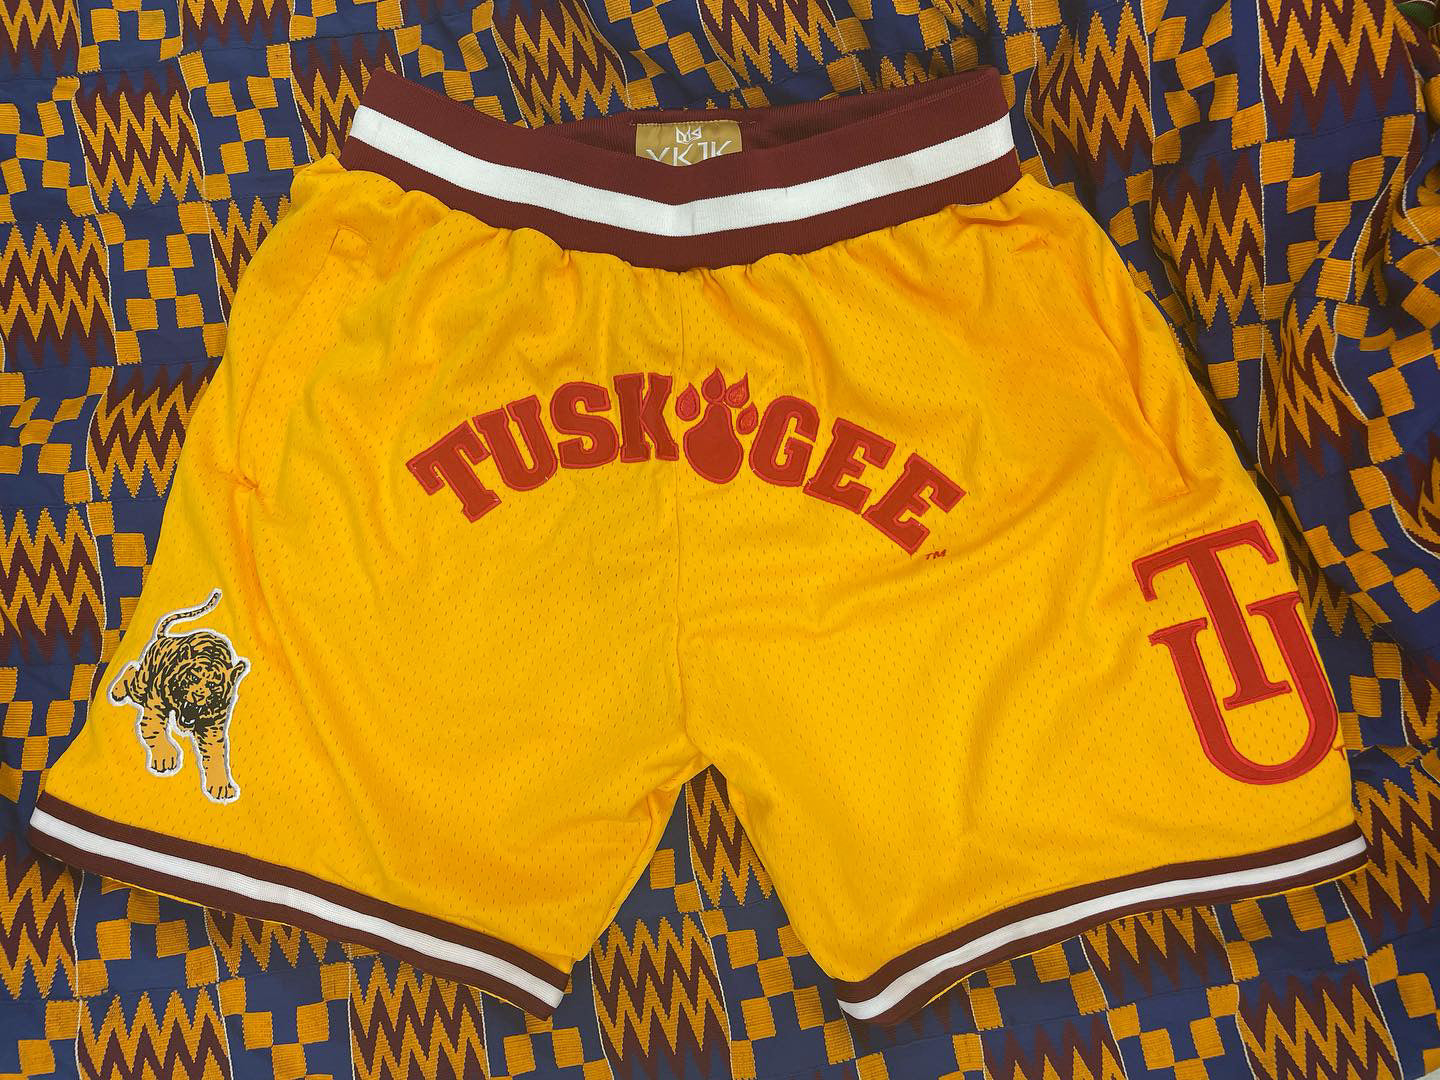 Tuskegee University Basketball Shorts